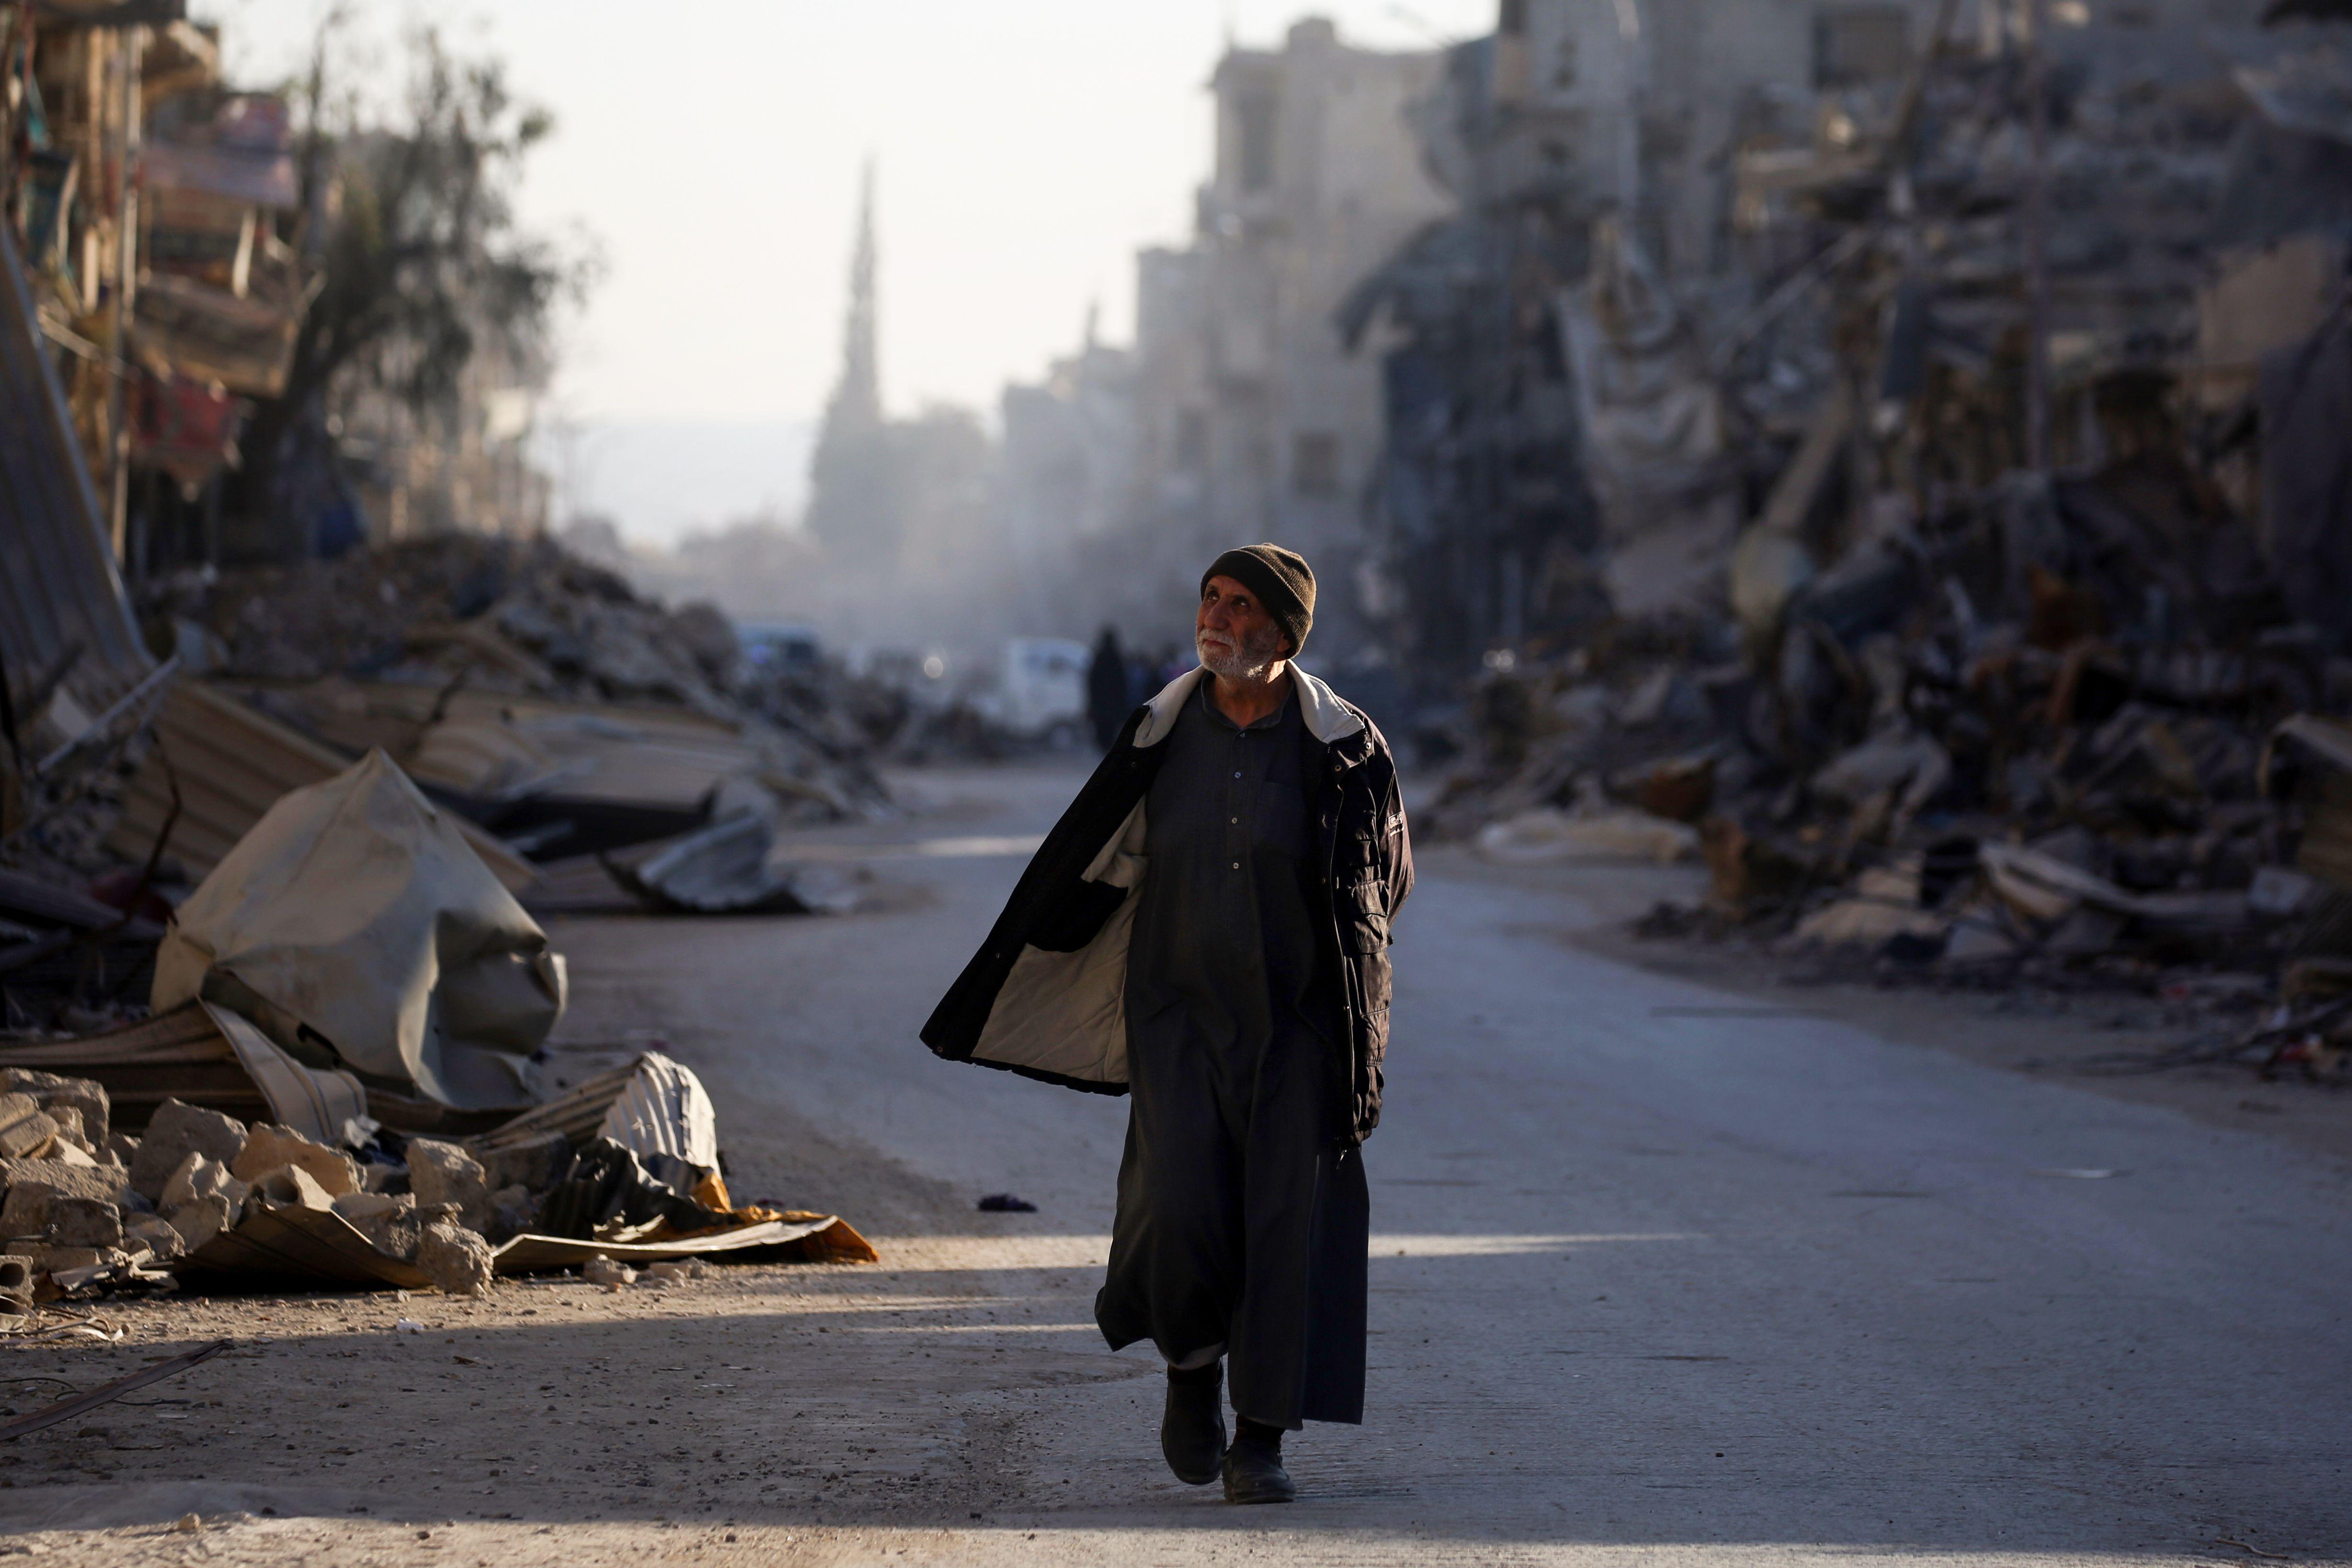 A man walks through a street in Syria’s devastated city of Raqqa on Jan. 9.